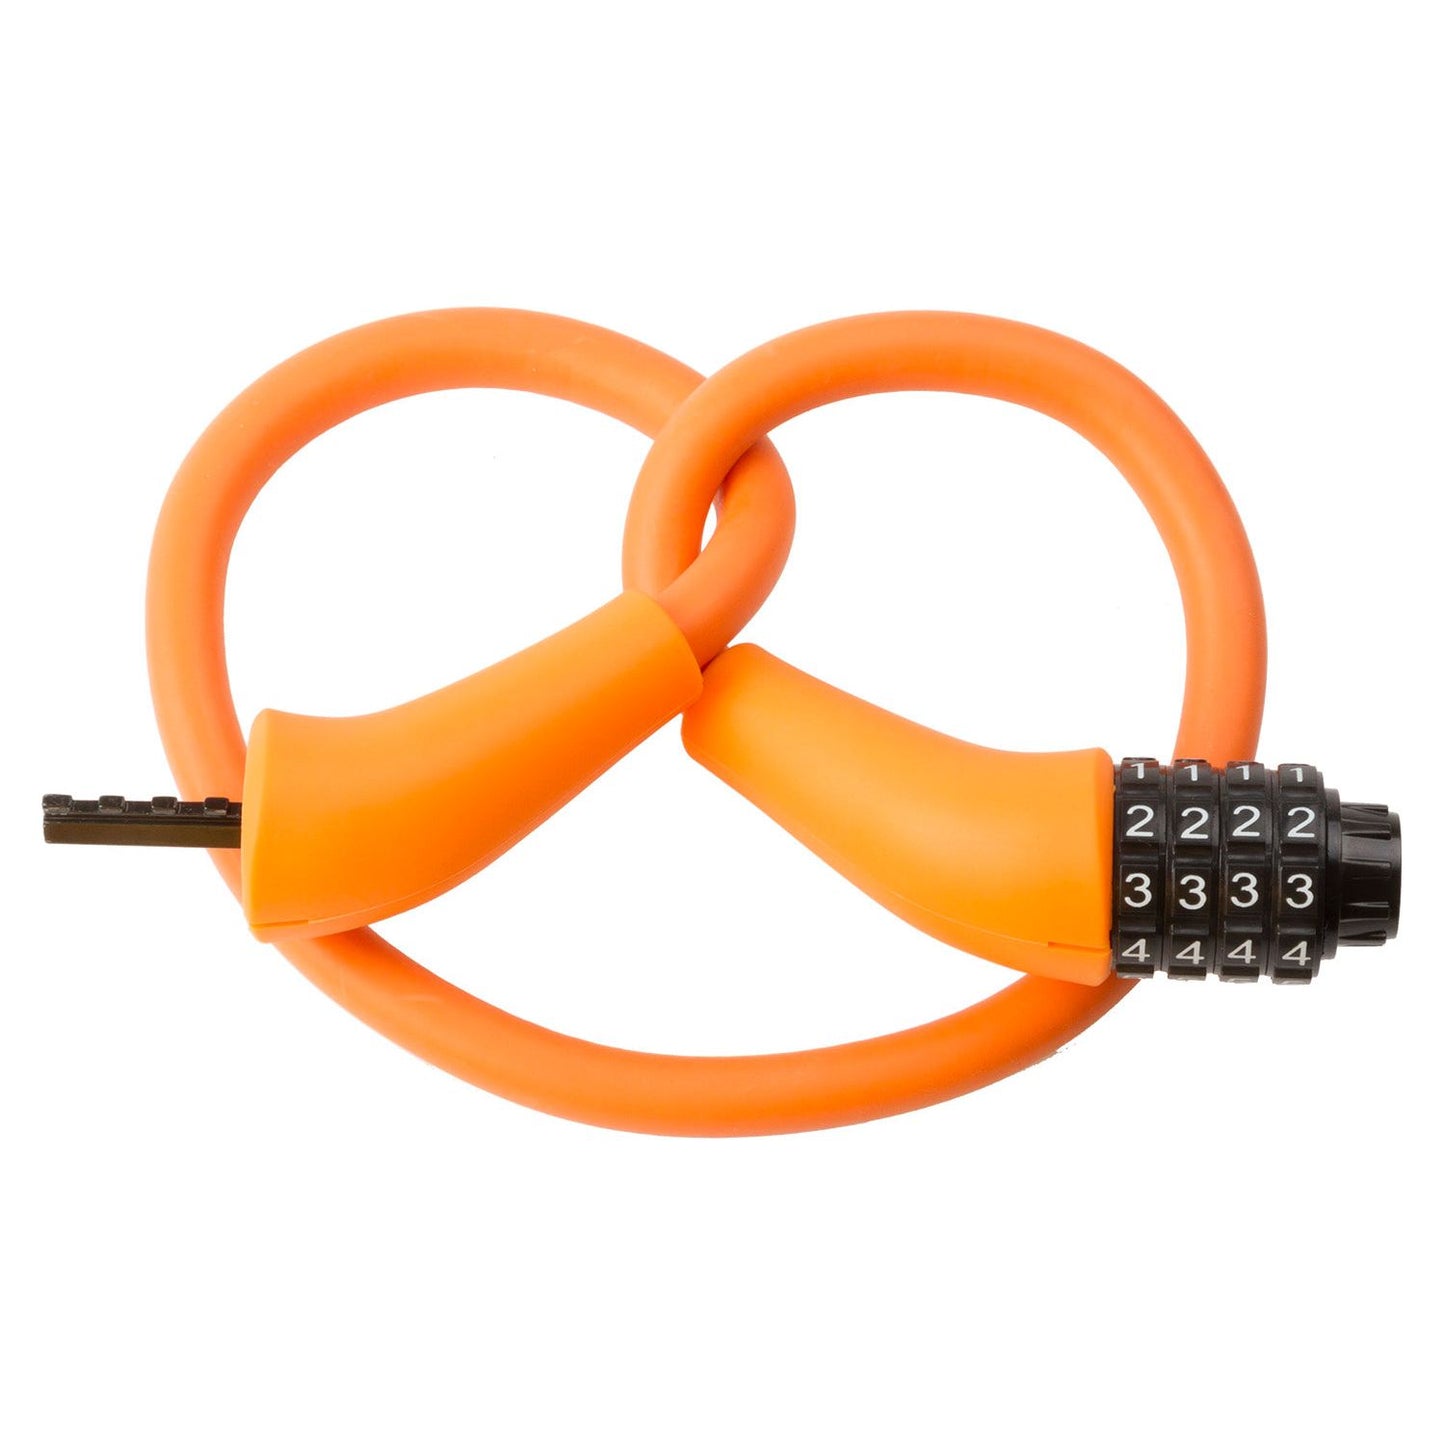 M-Wave Kabelcijferslot Silicon 900 x 12mm oranje